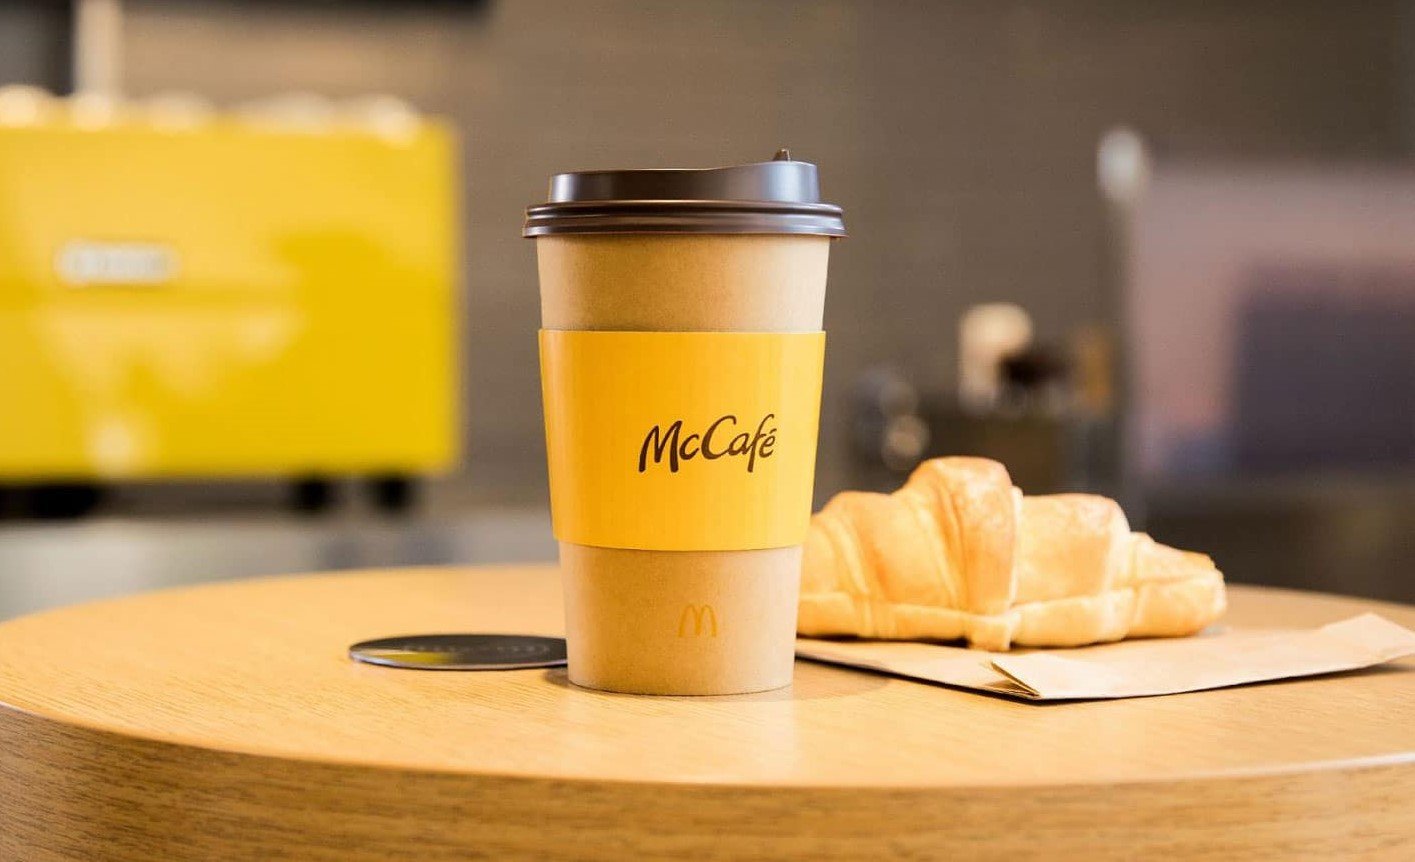 McCafe Marketing Mix